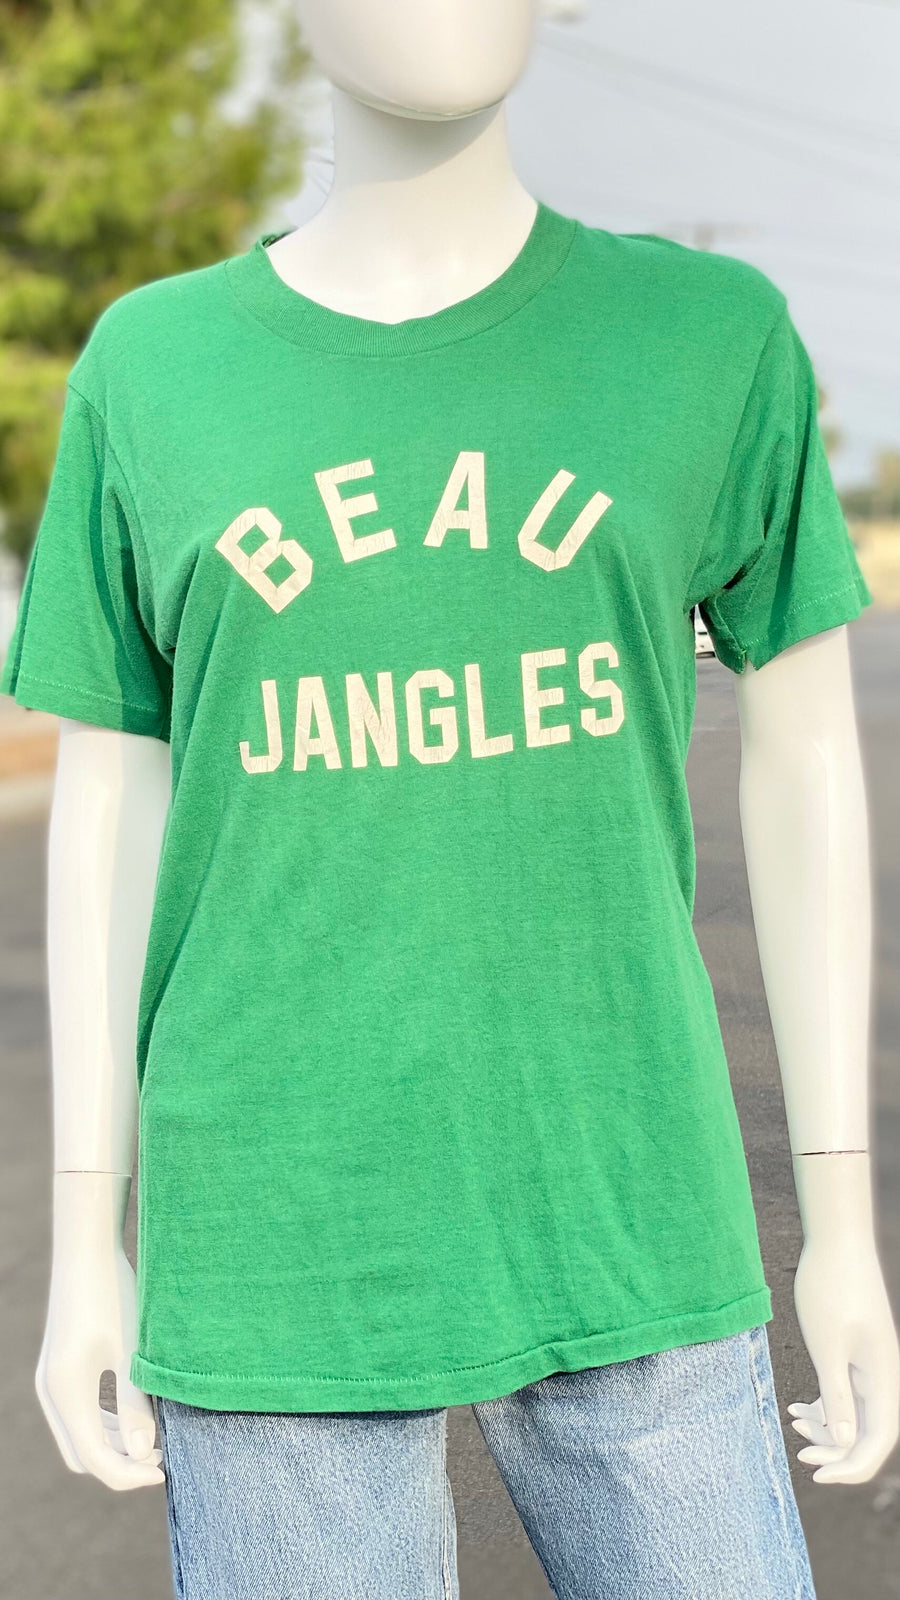 Beau Jangles T-shirt